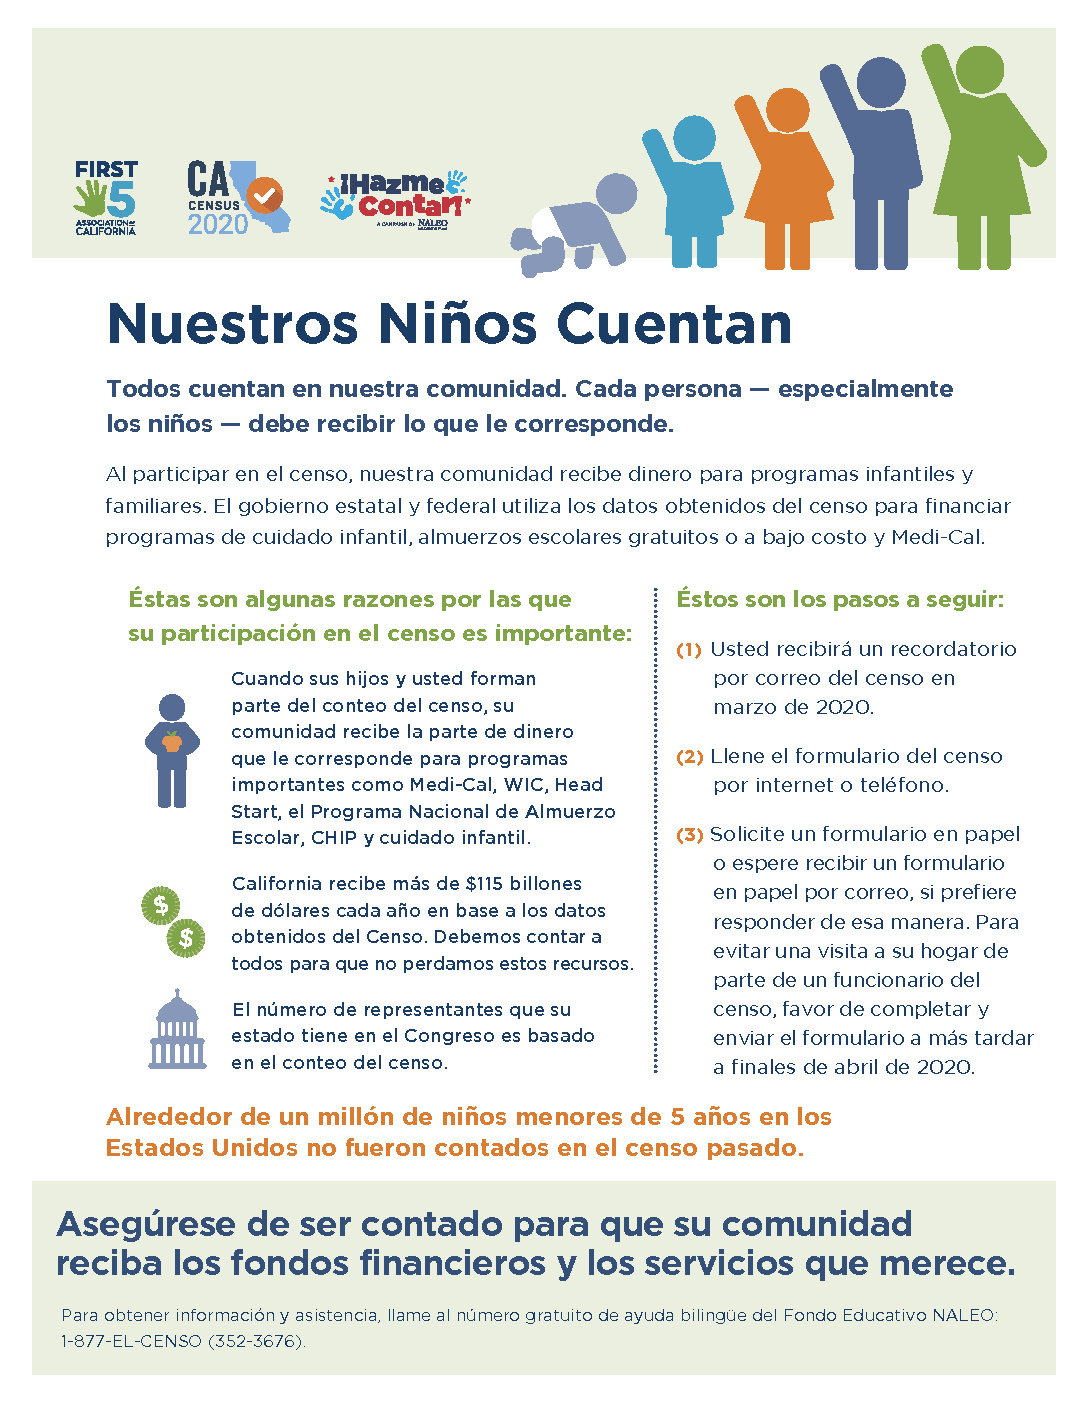 Español: Our Kids Count